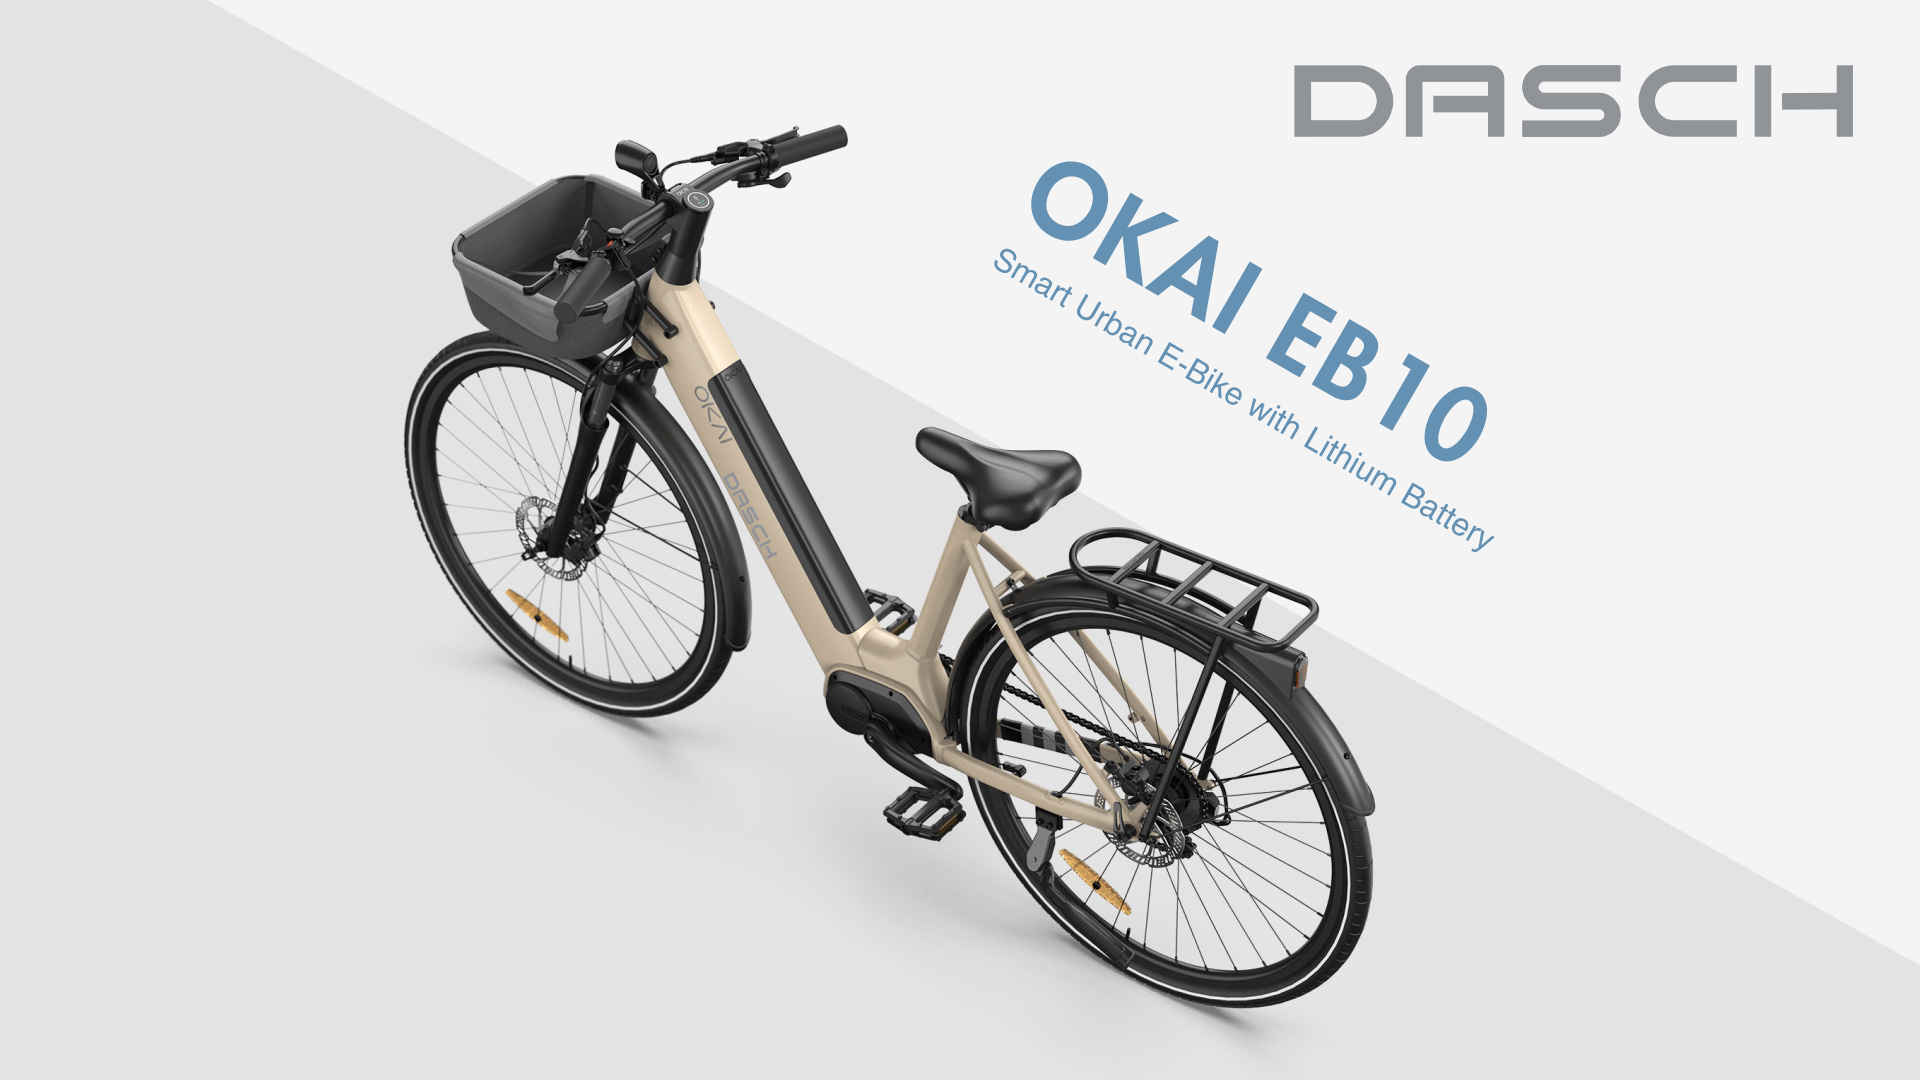 DASCH OKAI EB 10 Electric bike